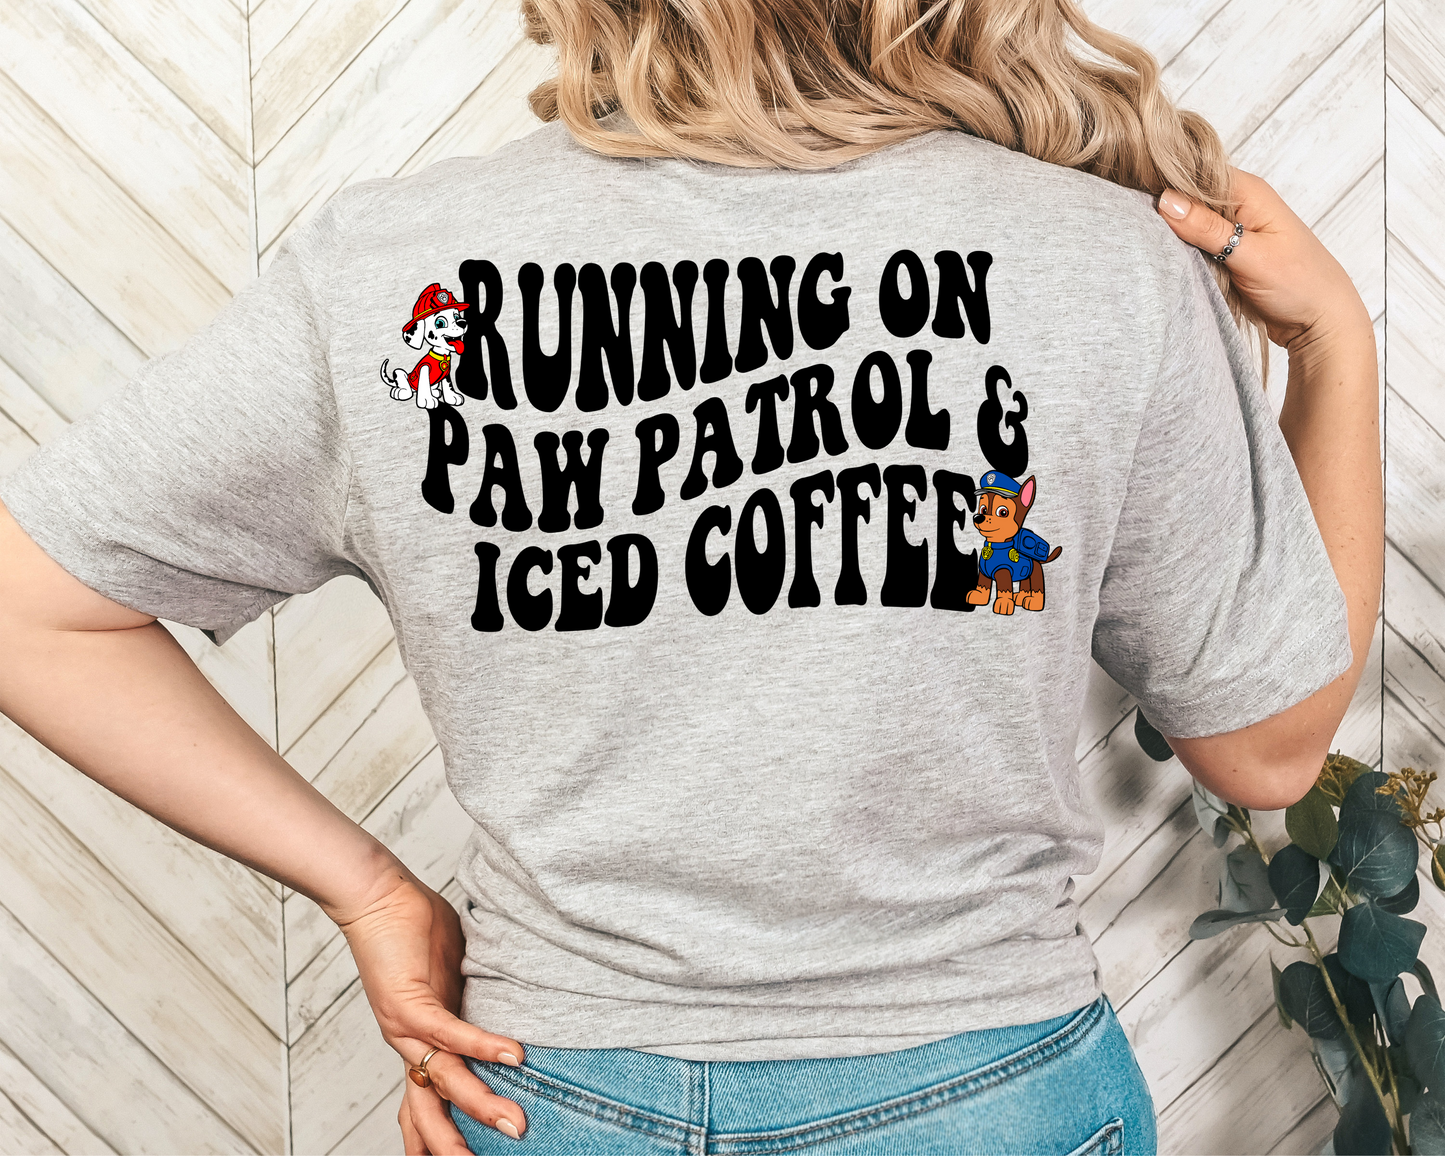 Running on Paw Patrol & Iced Coffee